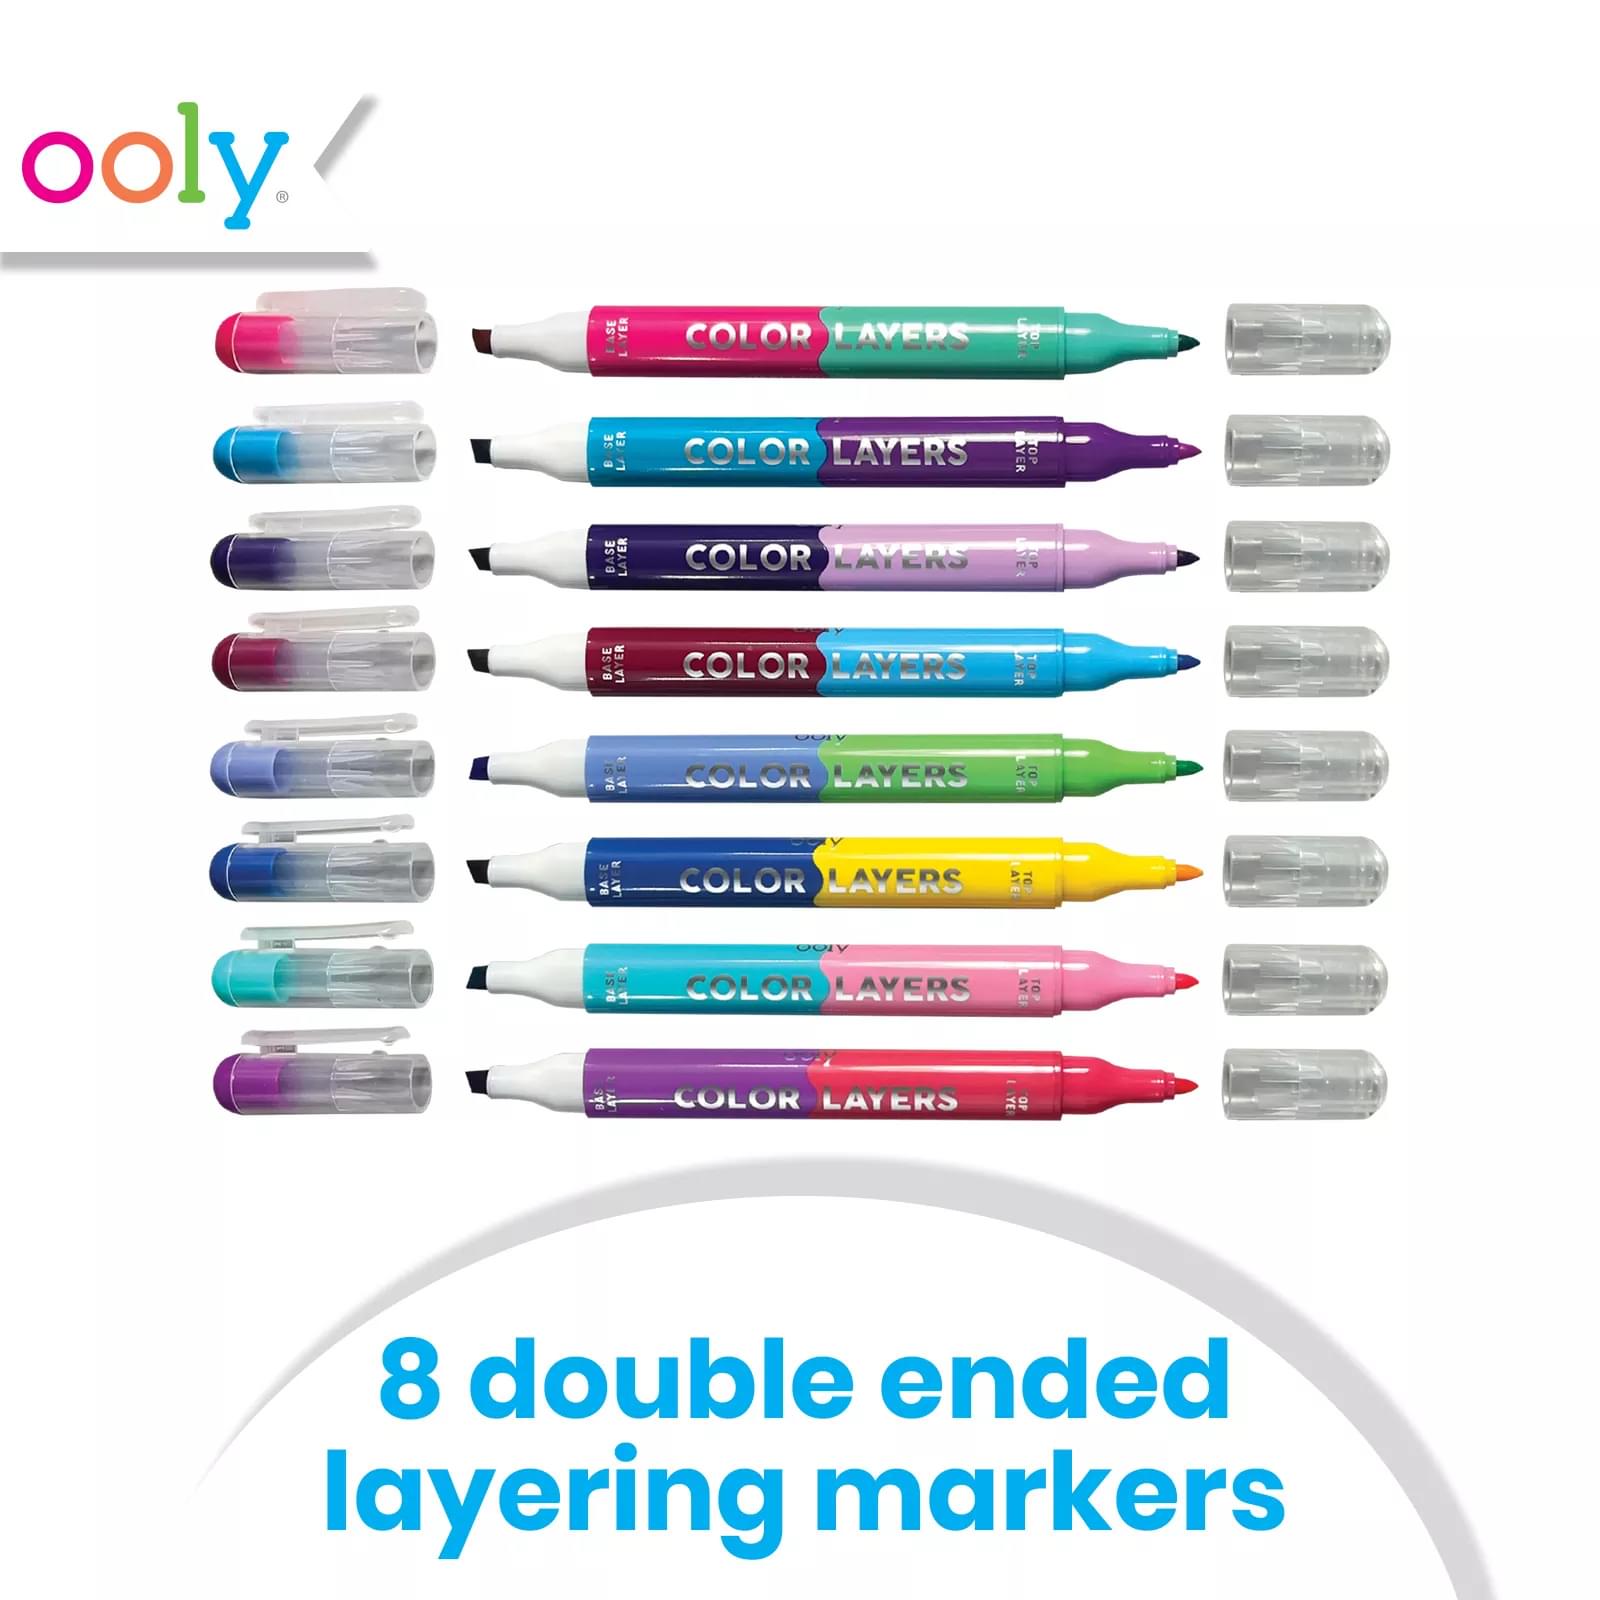 Fabric Doodlers Markers – Bundle of 12 Sets - OOLY